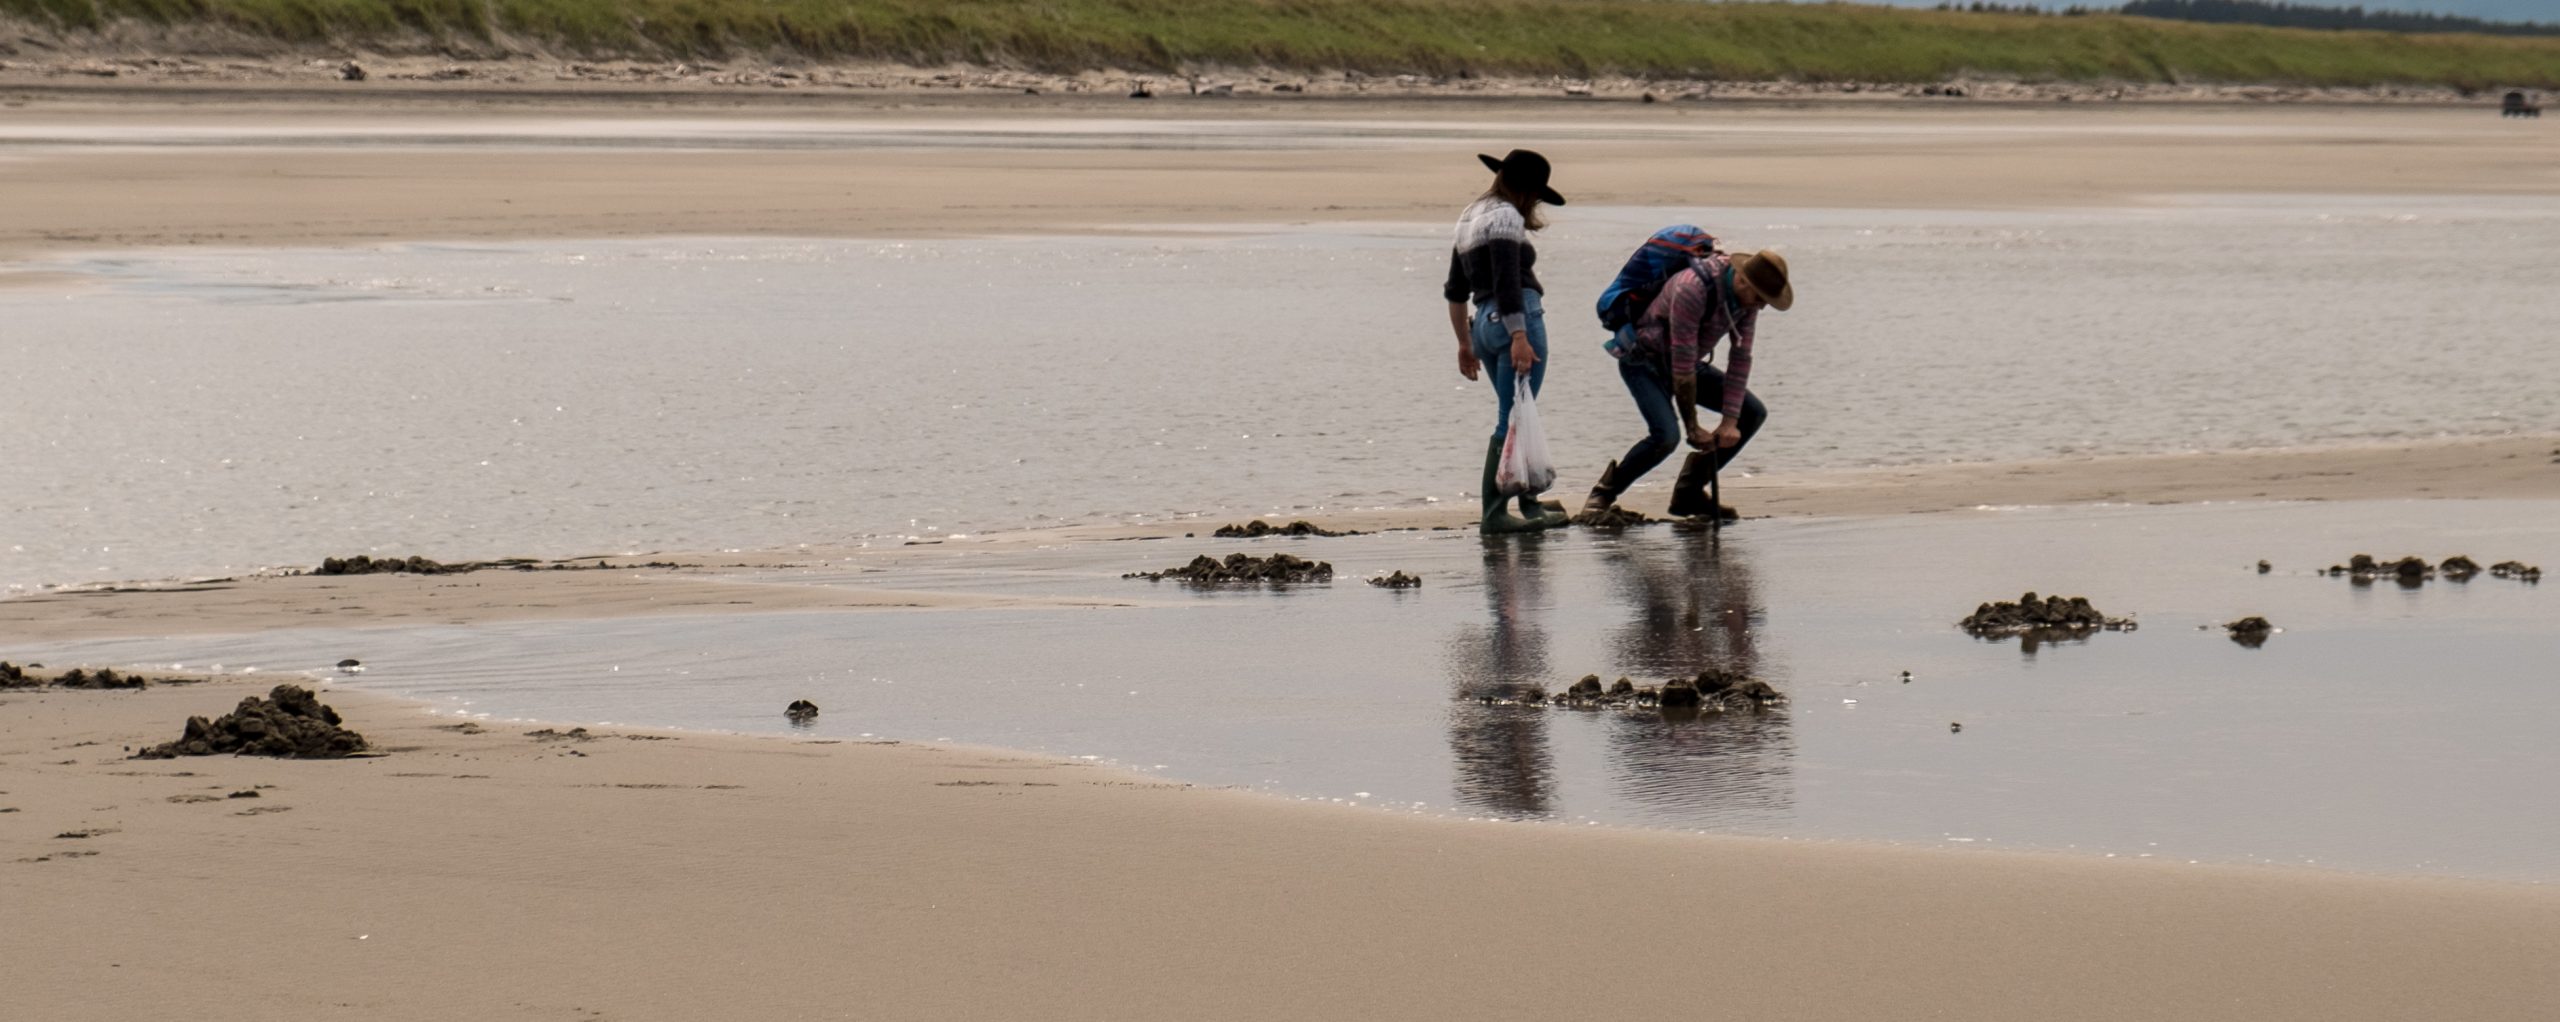 Two people shellfishing on a sandy shore